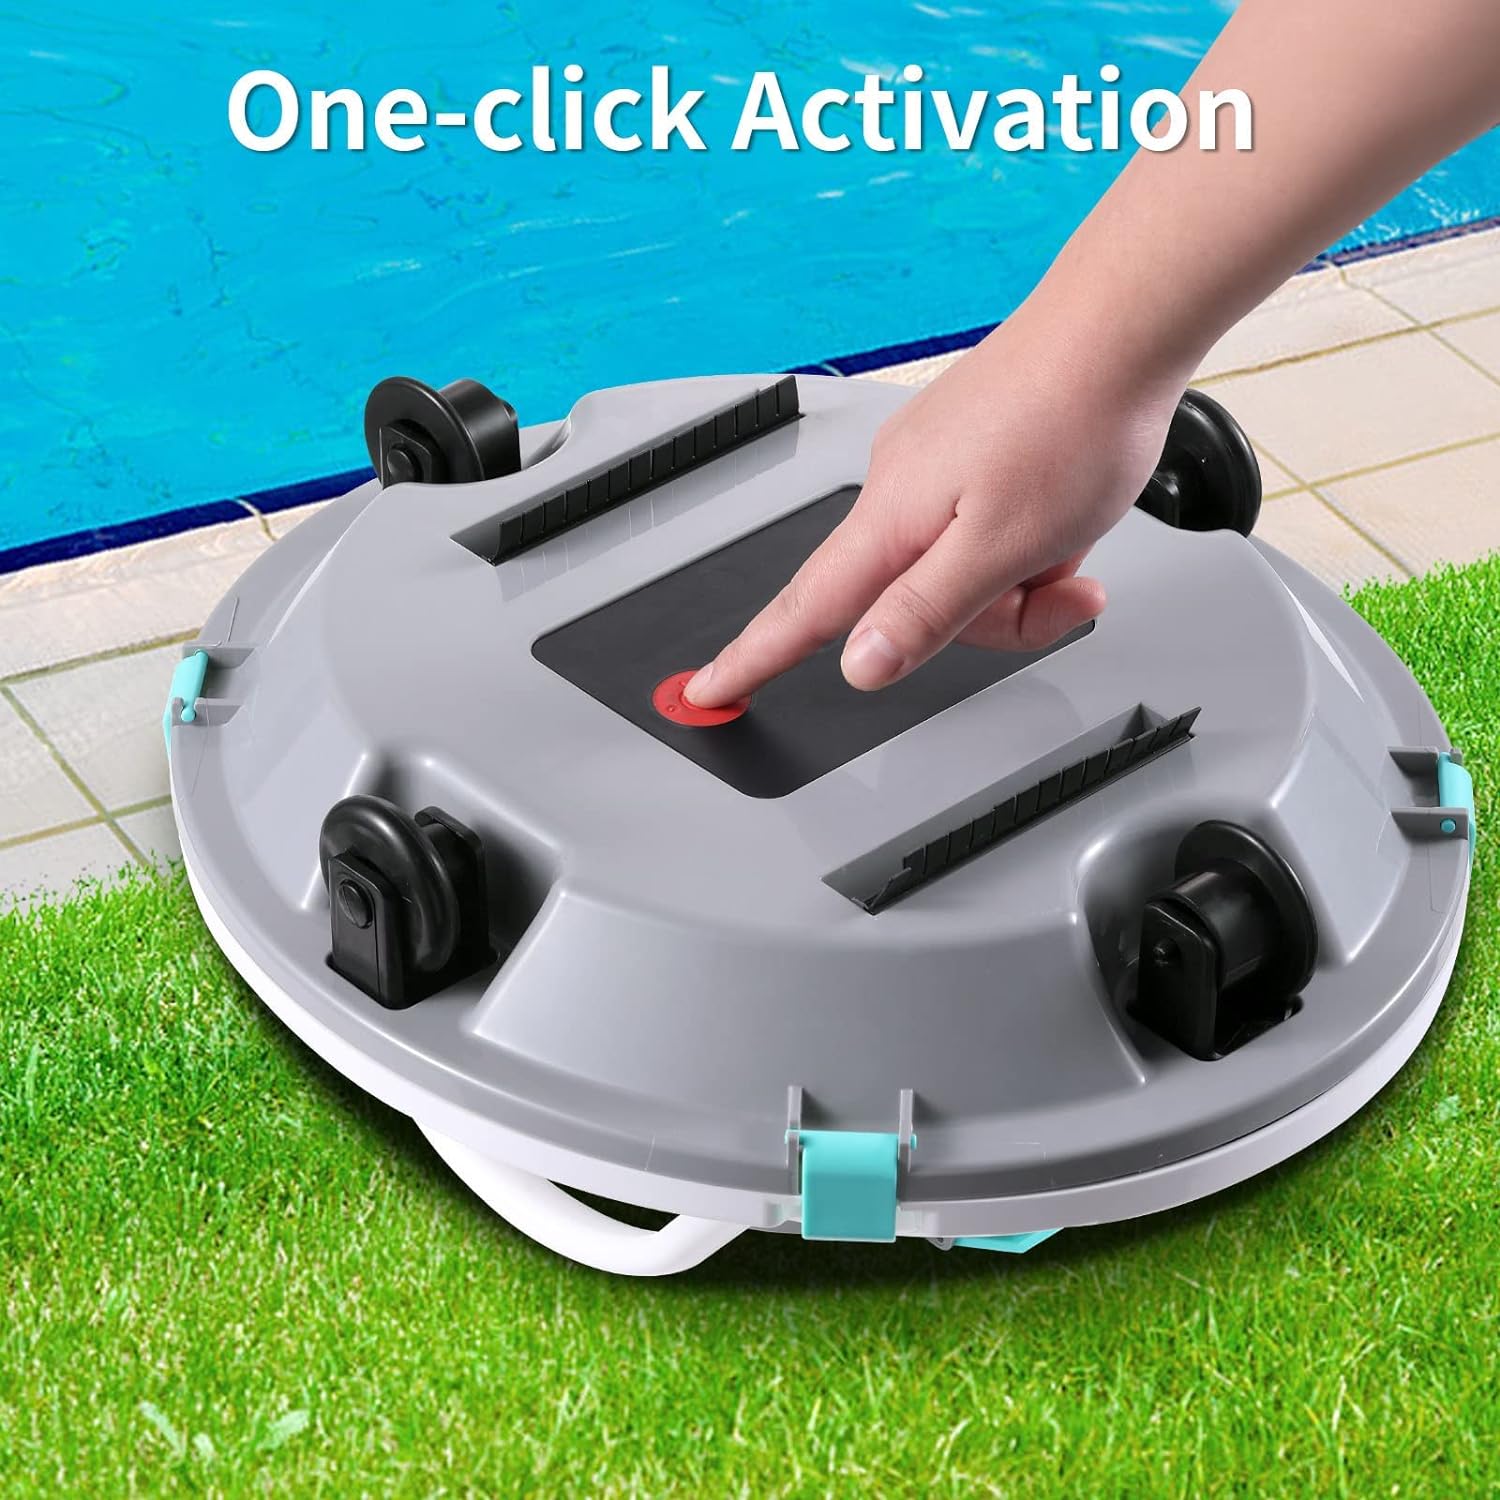 Analysis of Moolan Cordless Pool Vacuum Cleaner, Robotic Pool Cleaner, Dual-Motor, Self-Parking